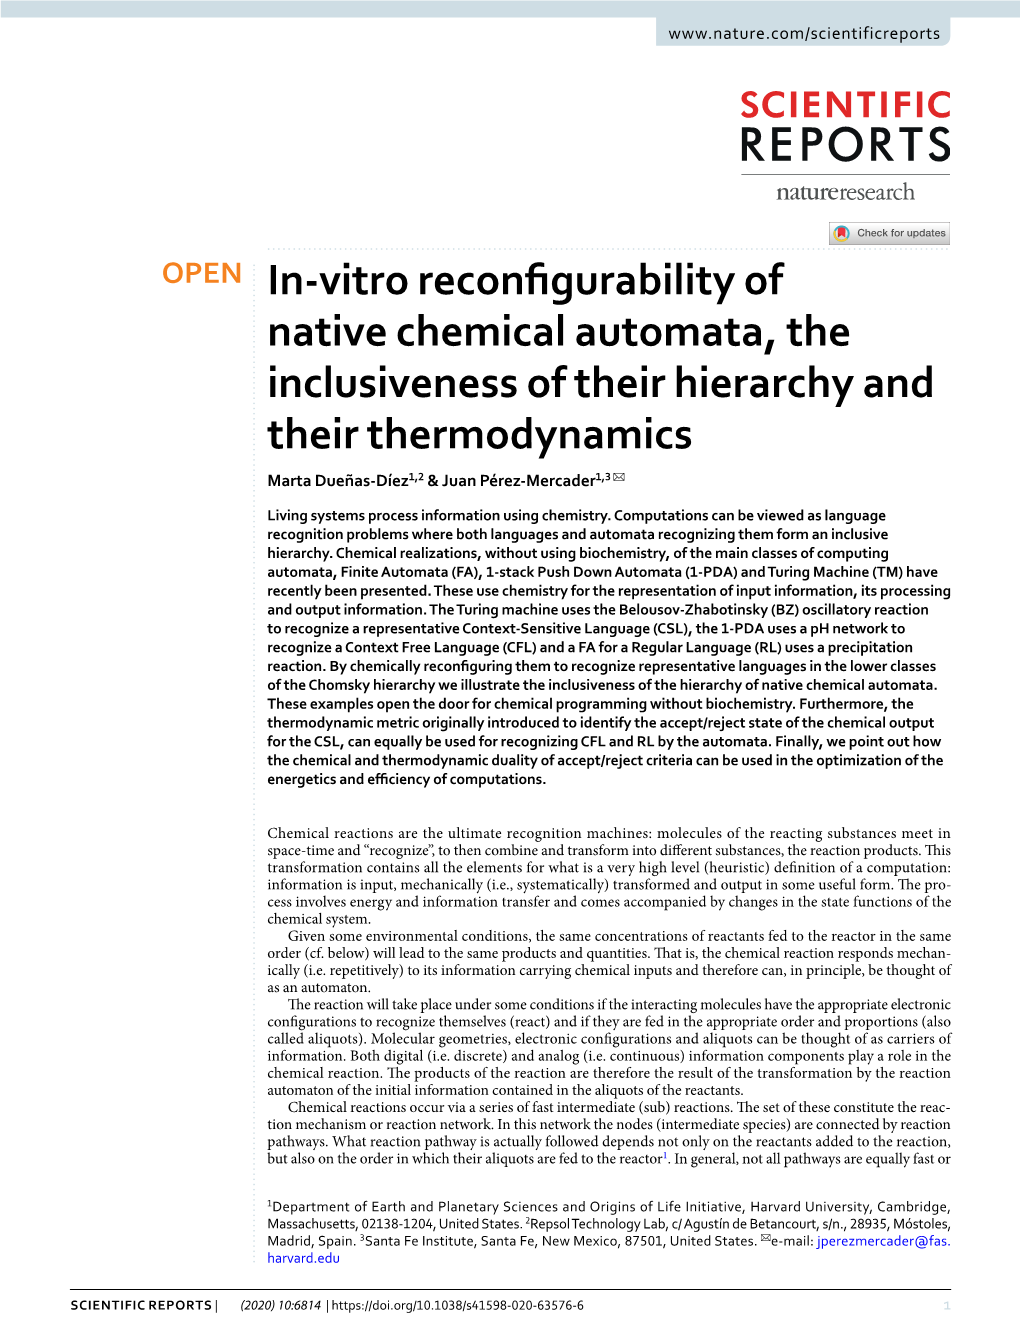 In-Vitro Reconfigurability of Native Chemical Automata, The